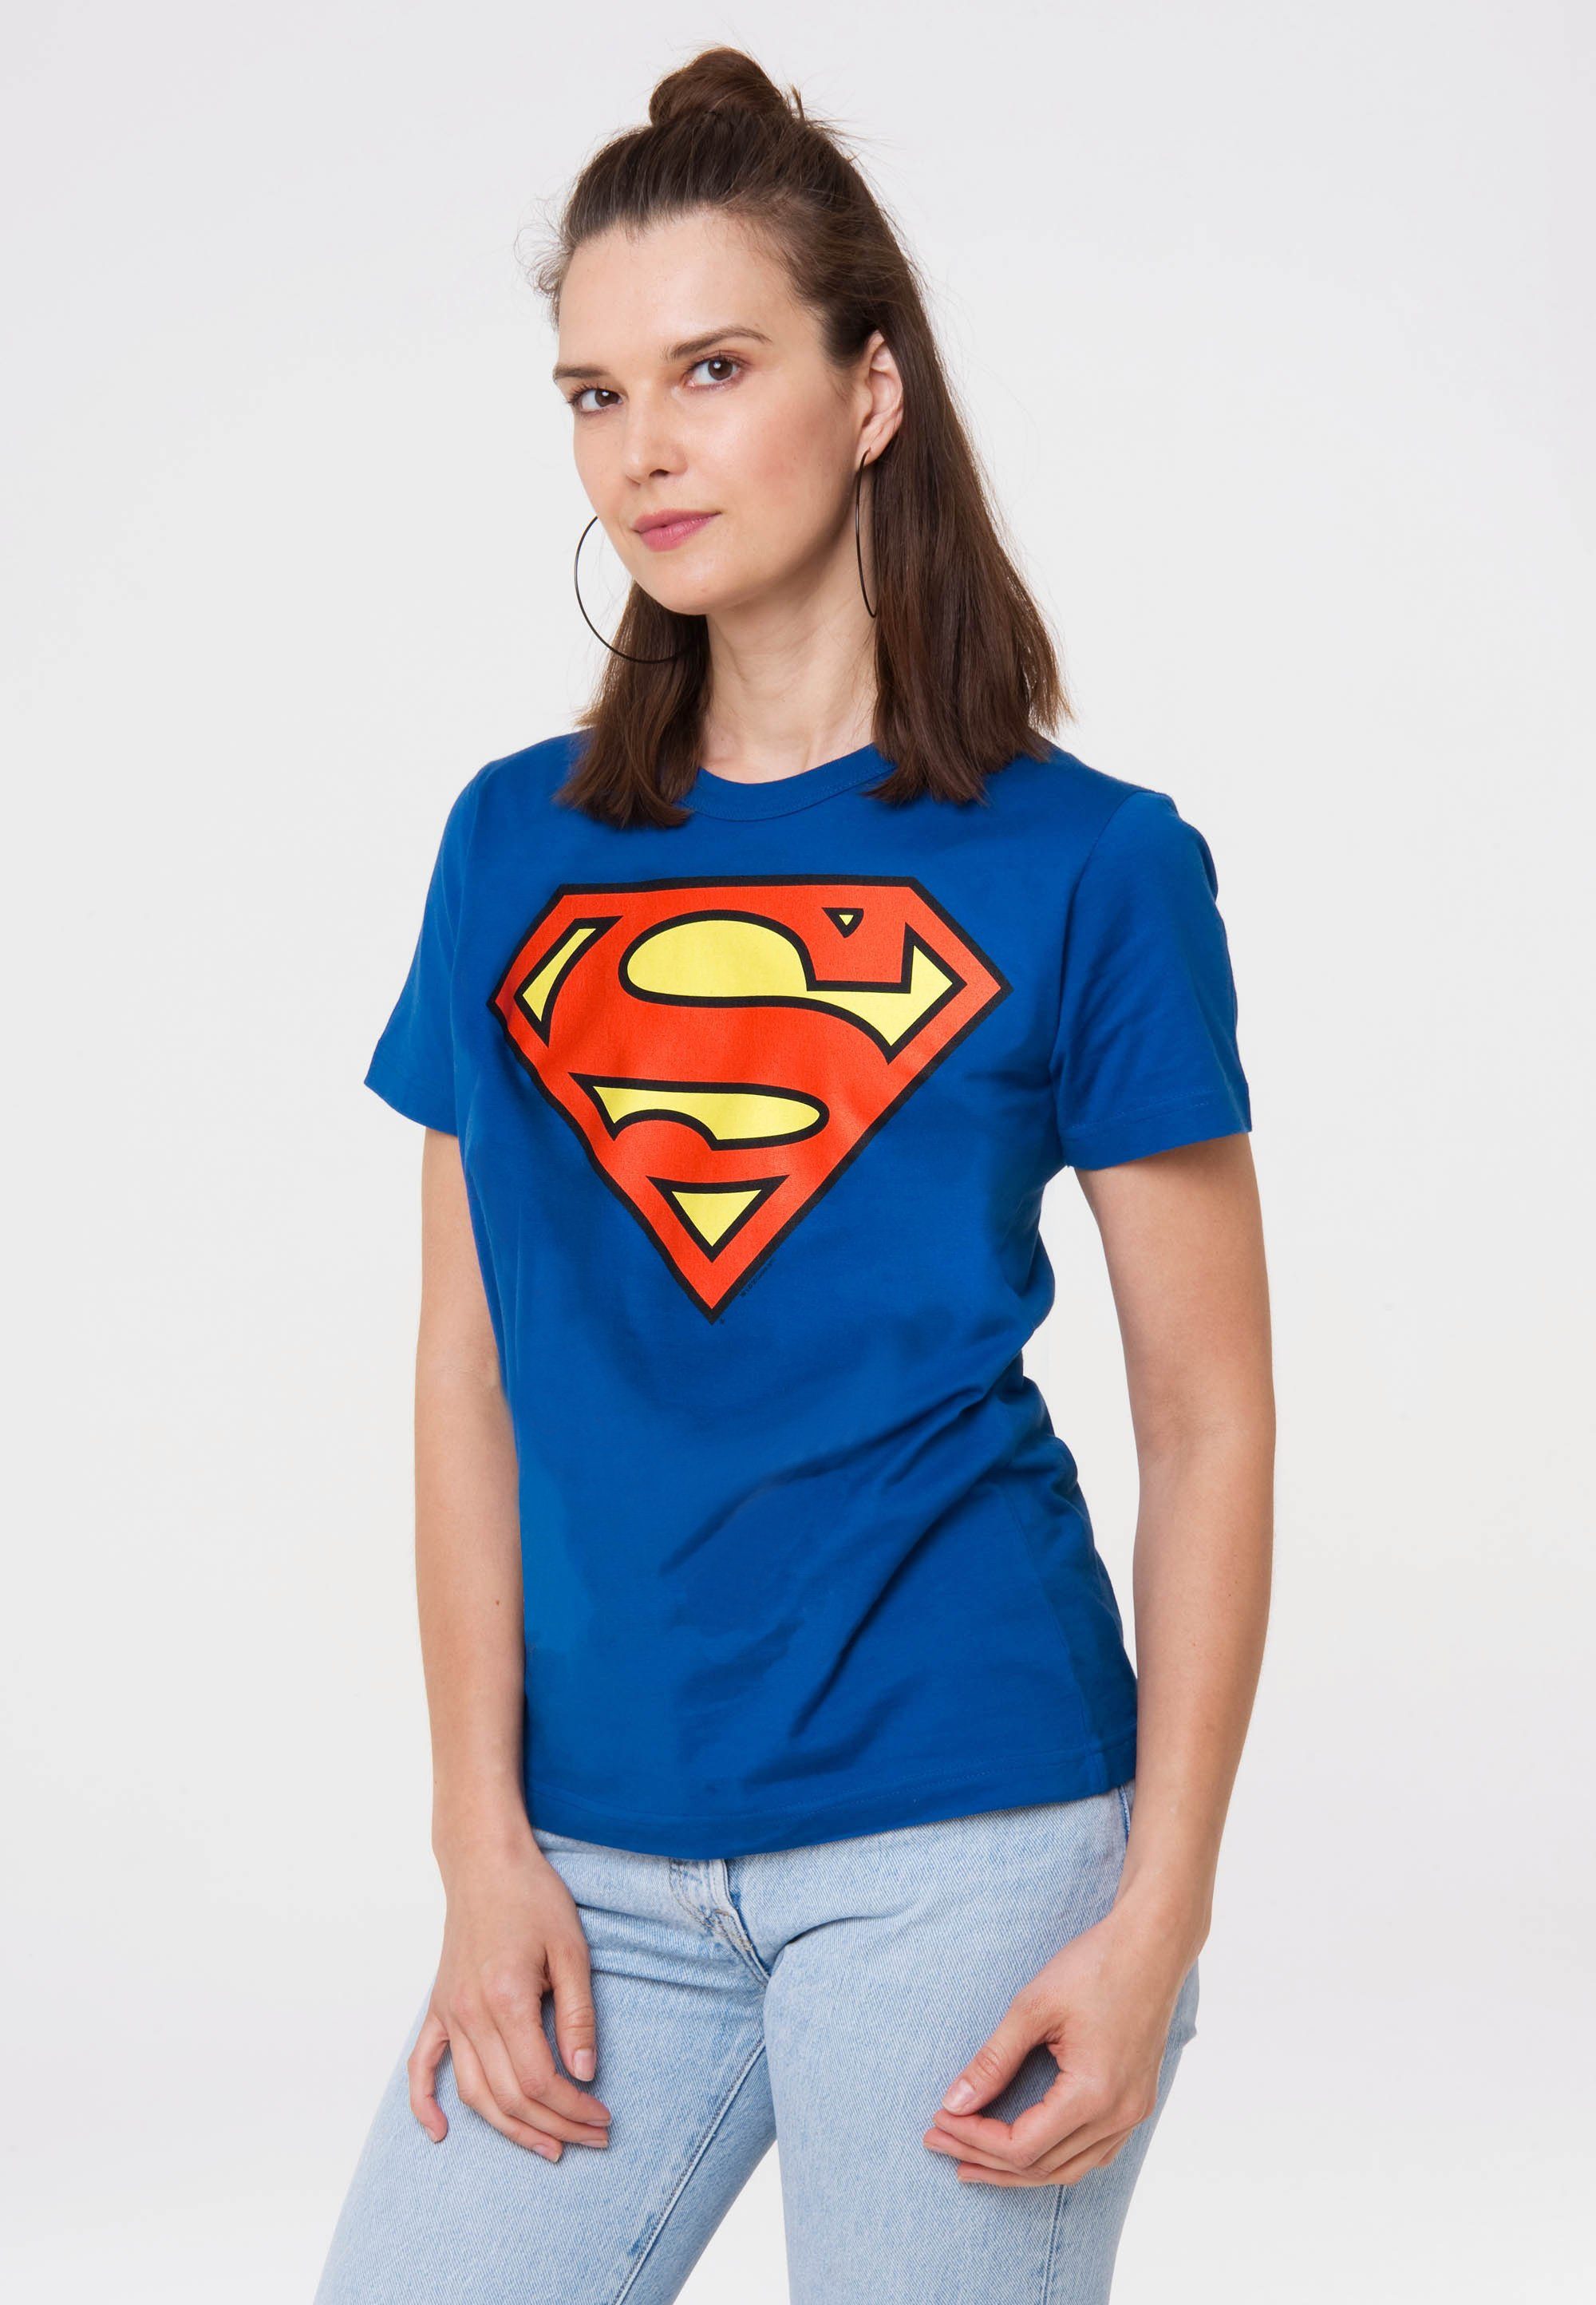 LOGOSHIRT T-Shirt Superman trendigem Logo Superhelden-Print mit blau